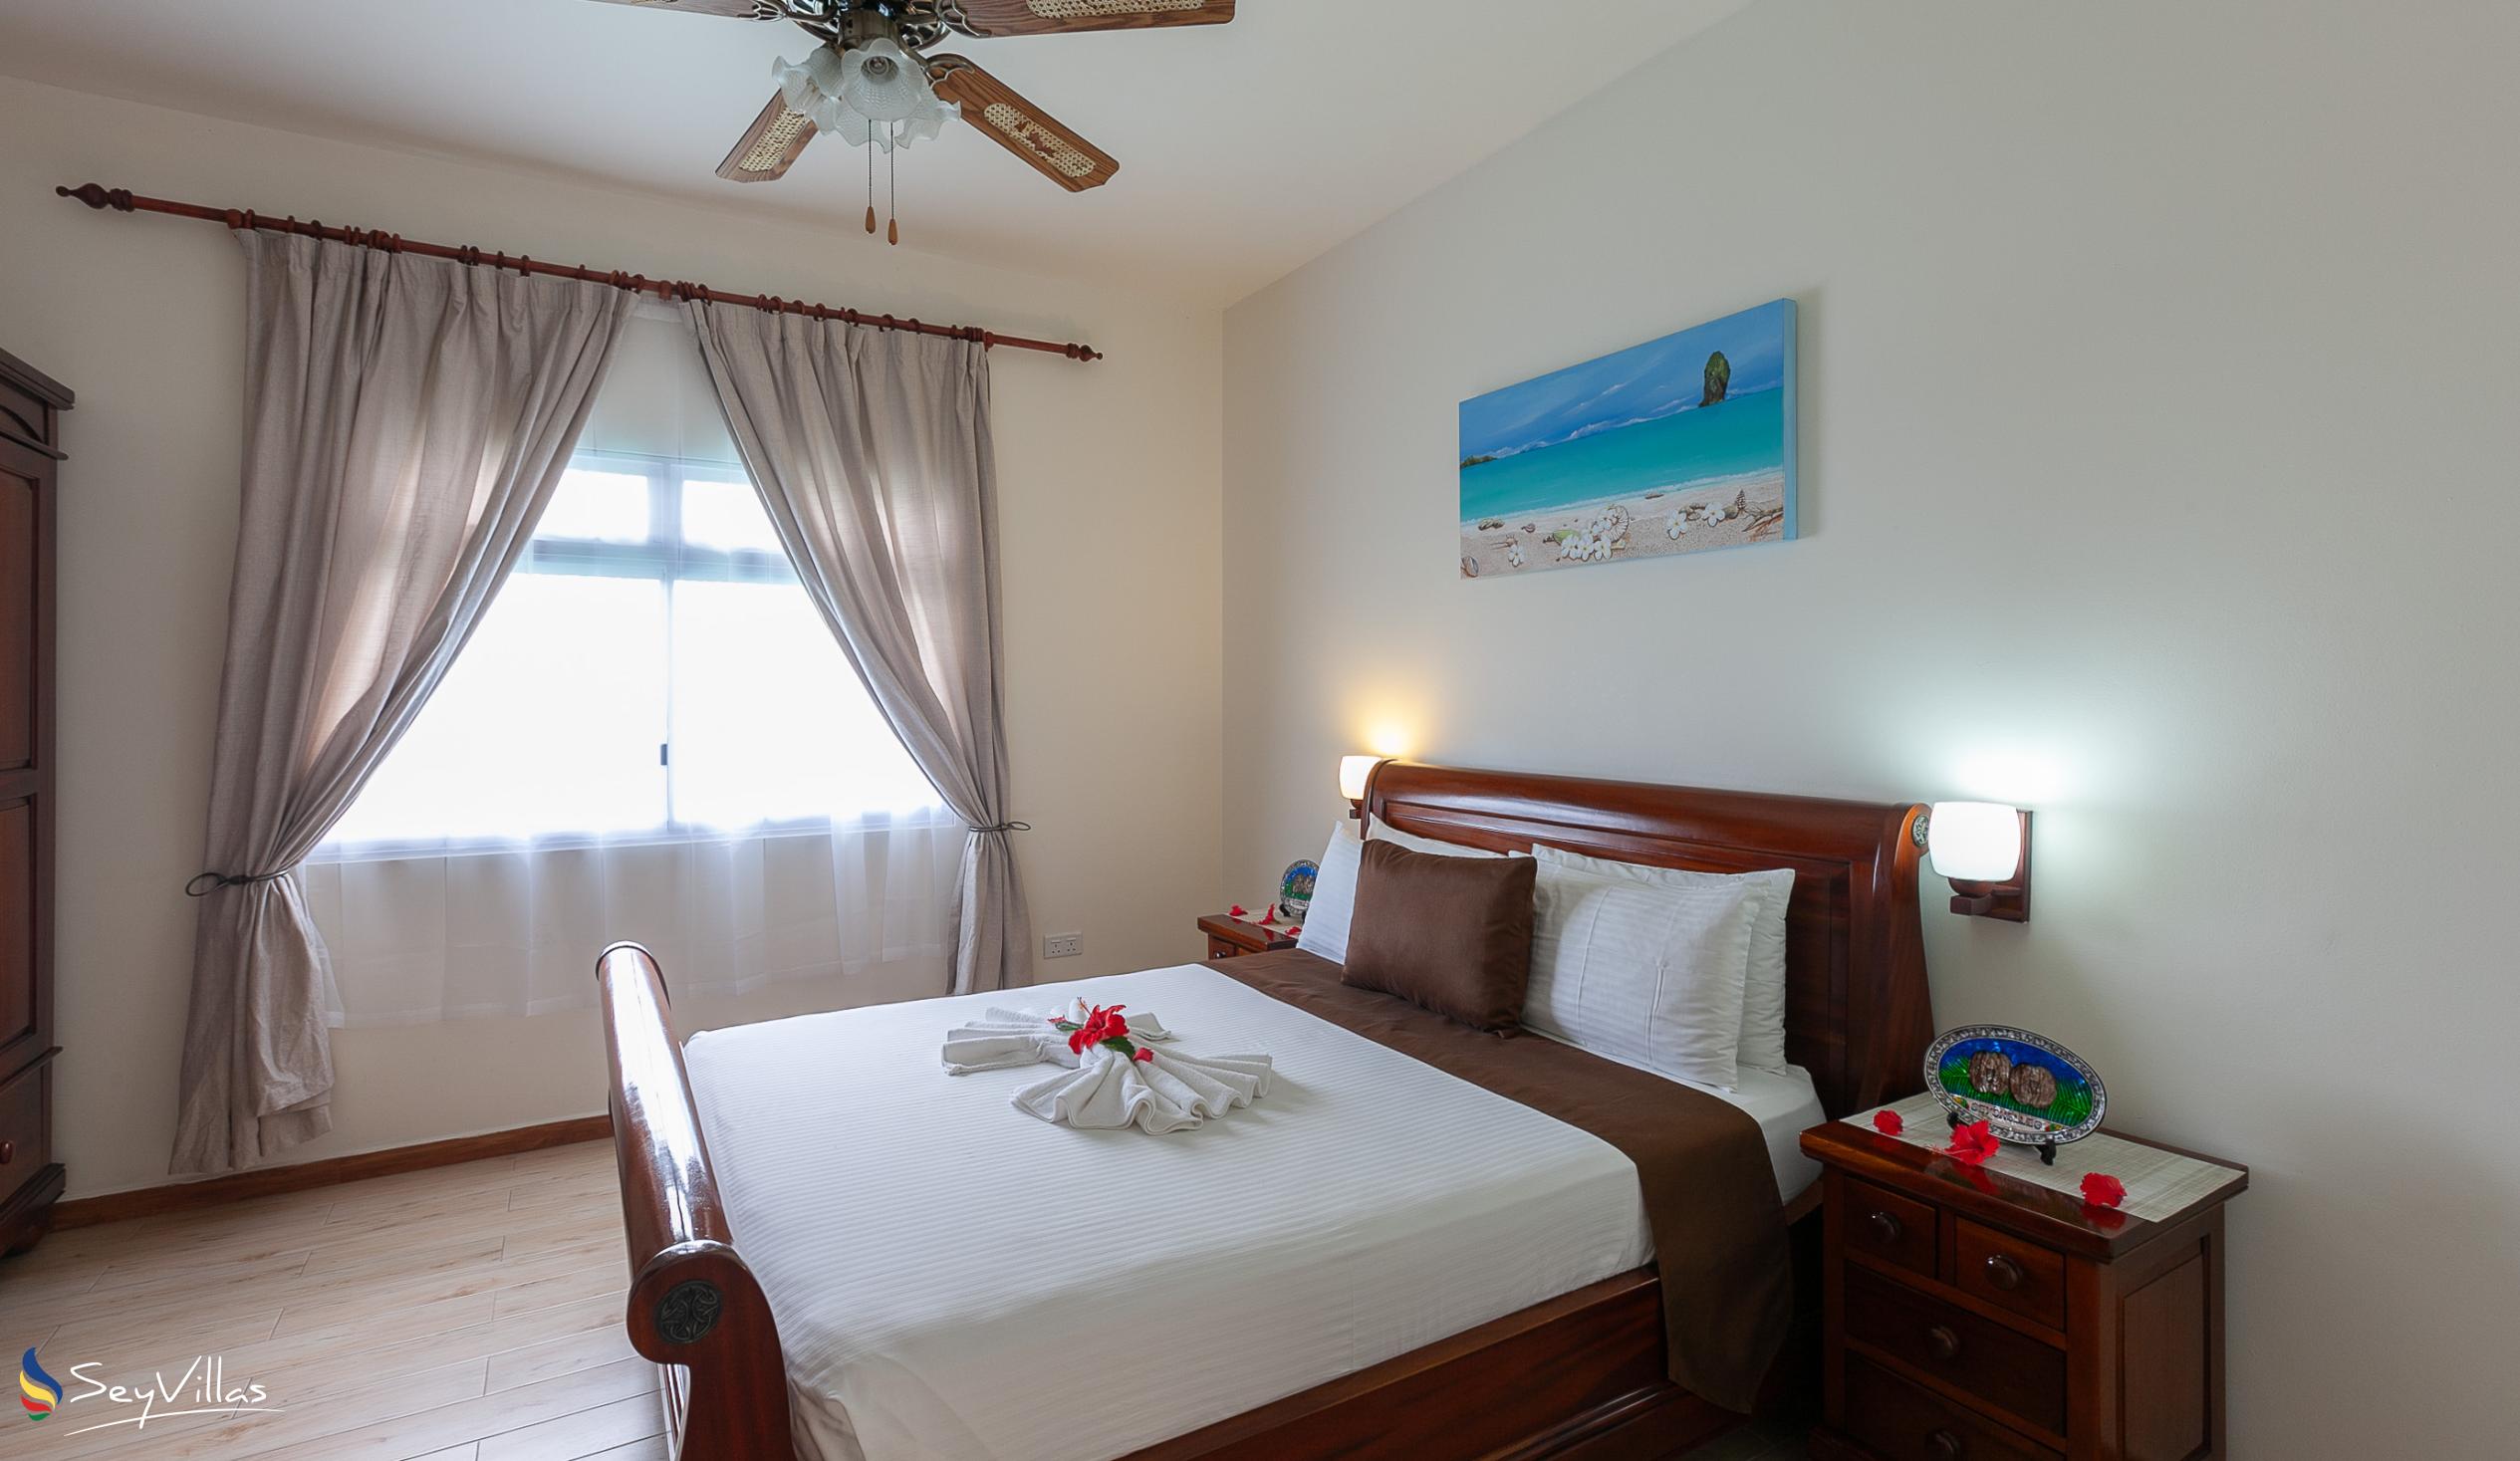 Foto 73: Seashell Beach Villa - Appartement 2 chambres - Praslin (Seychelles)